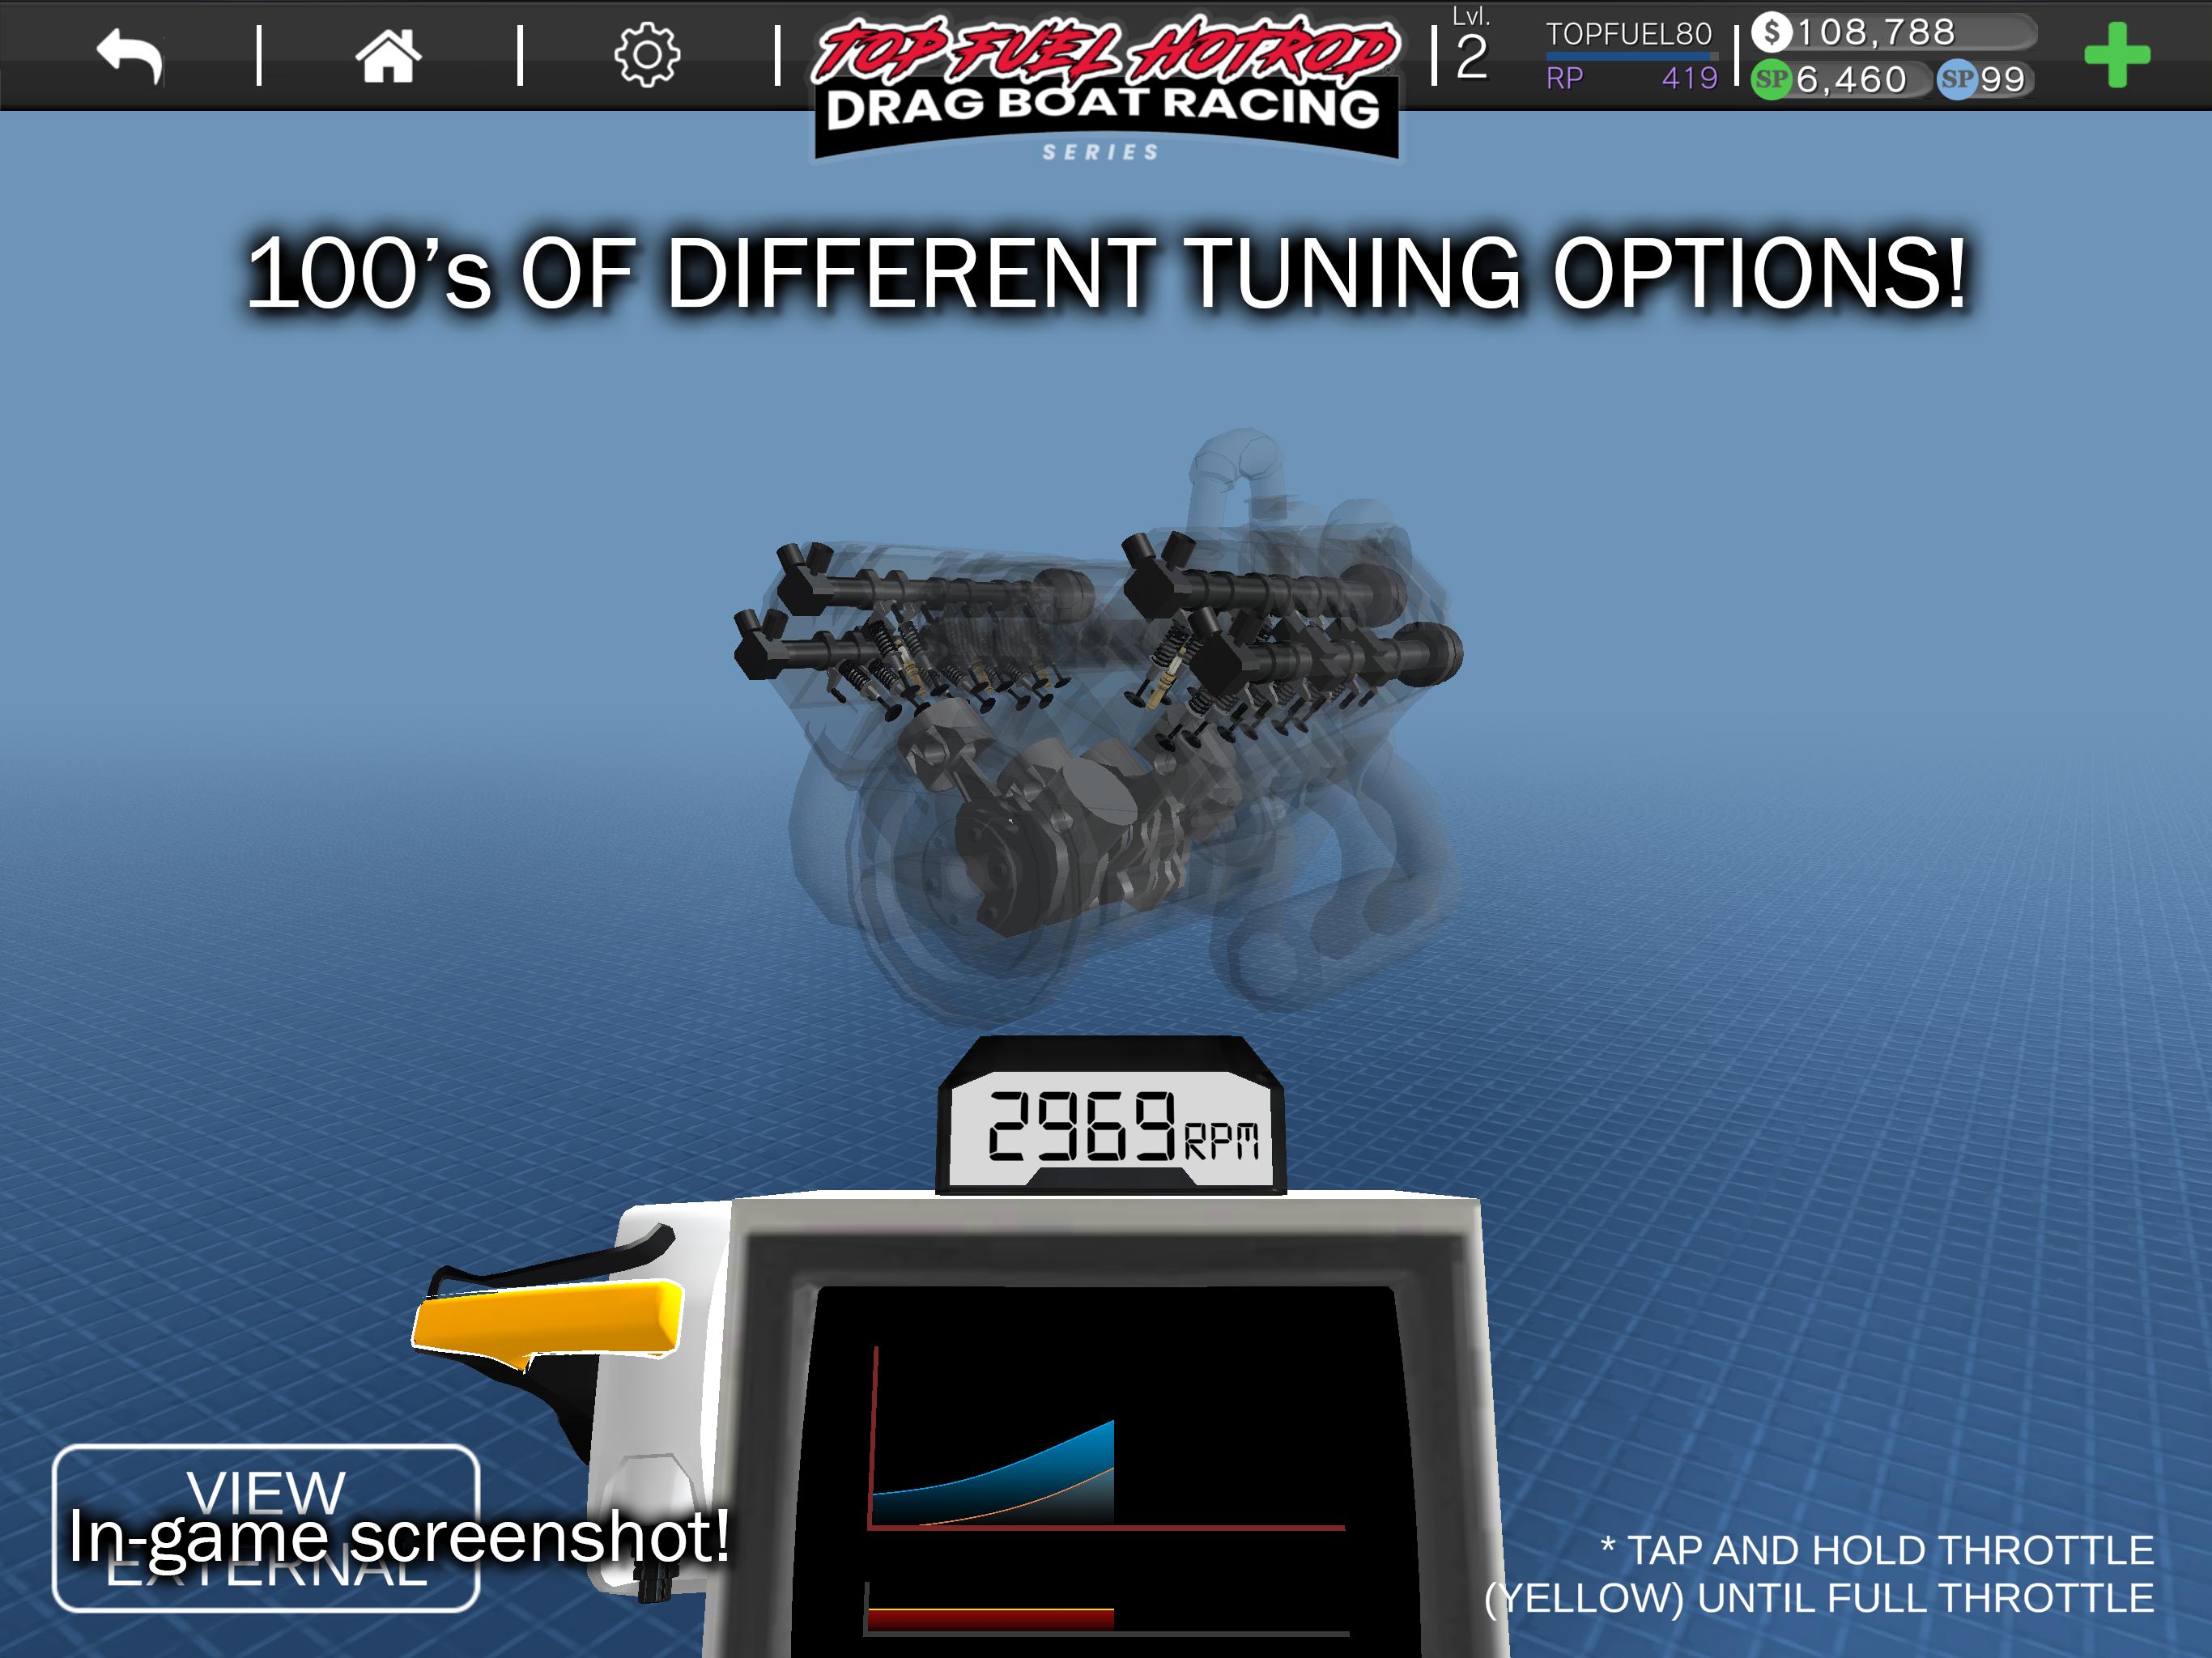 Top Fuel Hot Rod - Drag Boat Speed Racing Game 1.16 Screenshot 24